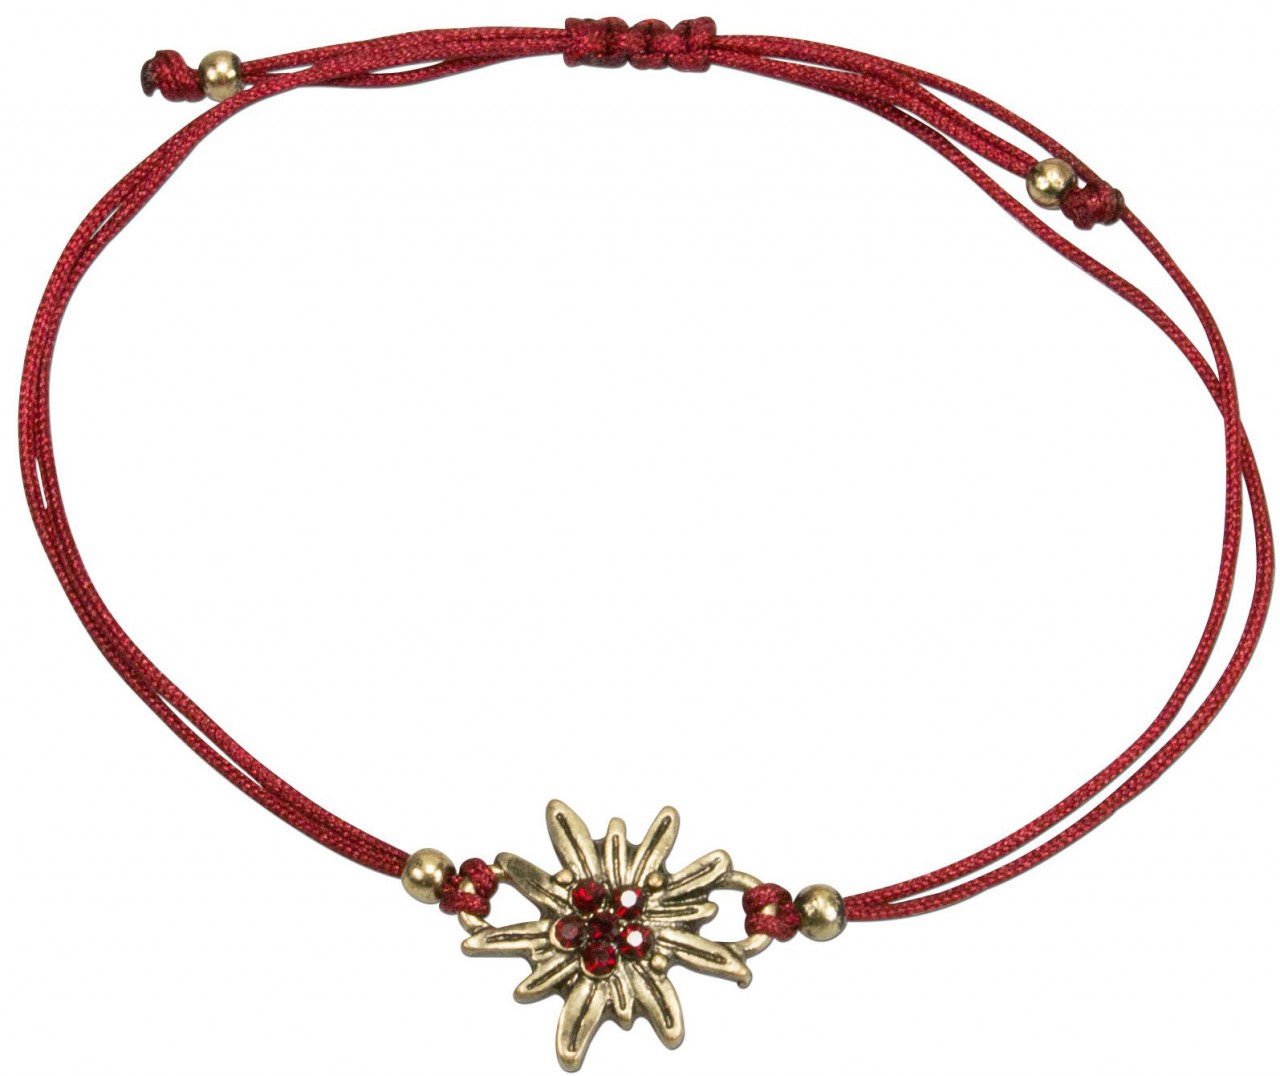 Aperçu: Set de bracelets de Trachten rouge